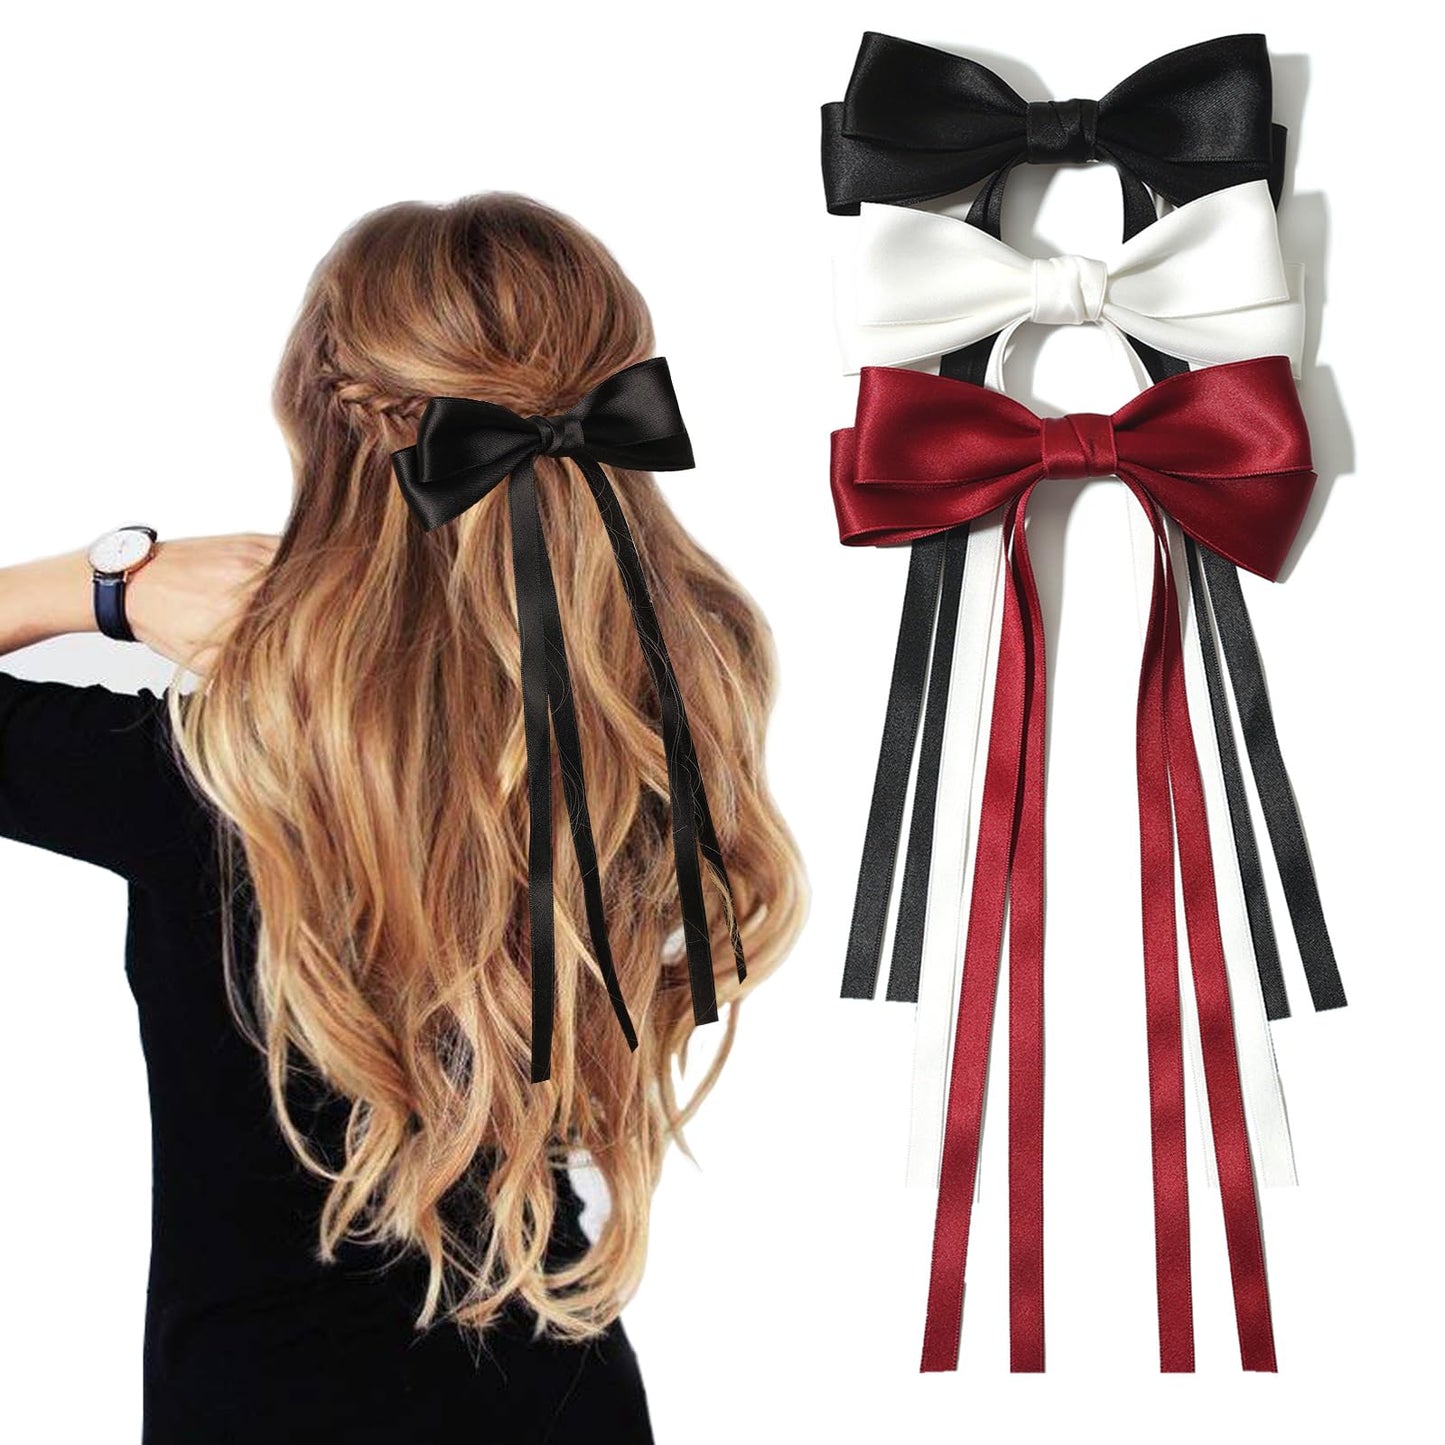 XFYUZR 3PCS Hair Bow for Women, Silky Satin Bows Metal Clip, Ribbon Hair Clips Bowknot With Long Tail, Tassle Bows Hair Barrettes Hair Accessories for Women Girls (black white burgundy)